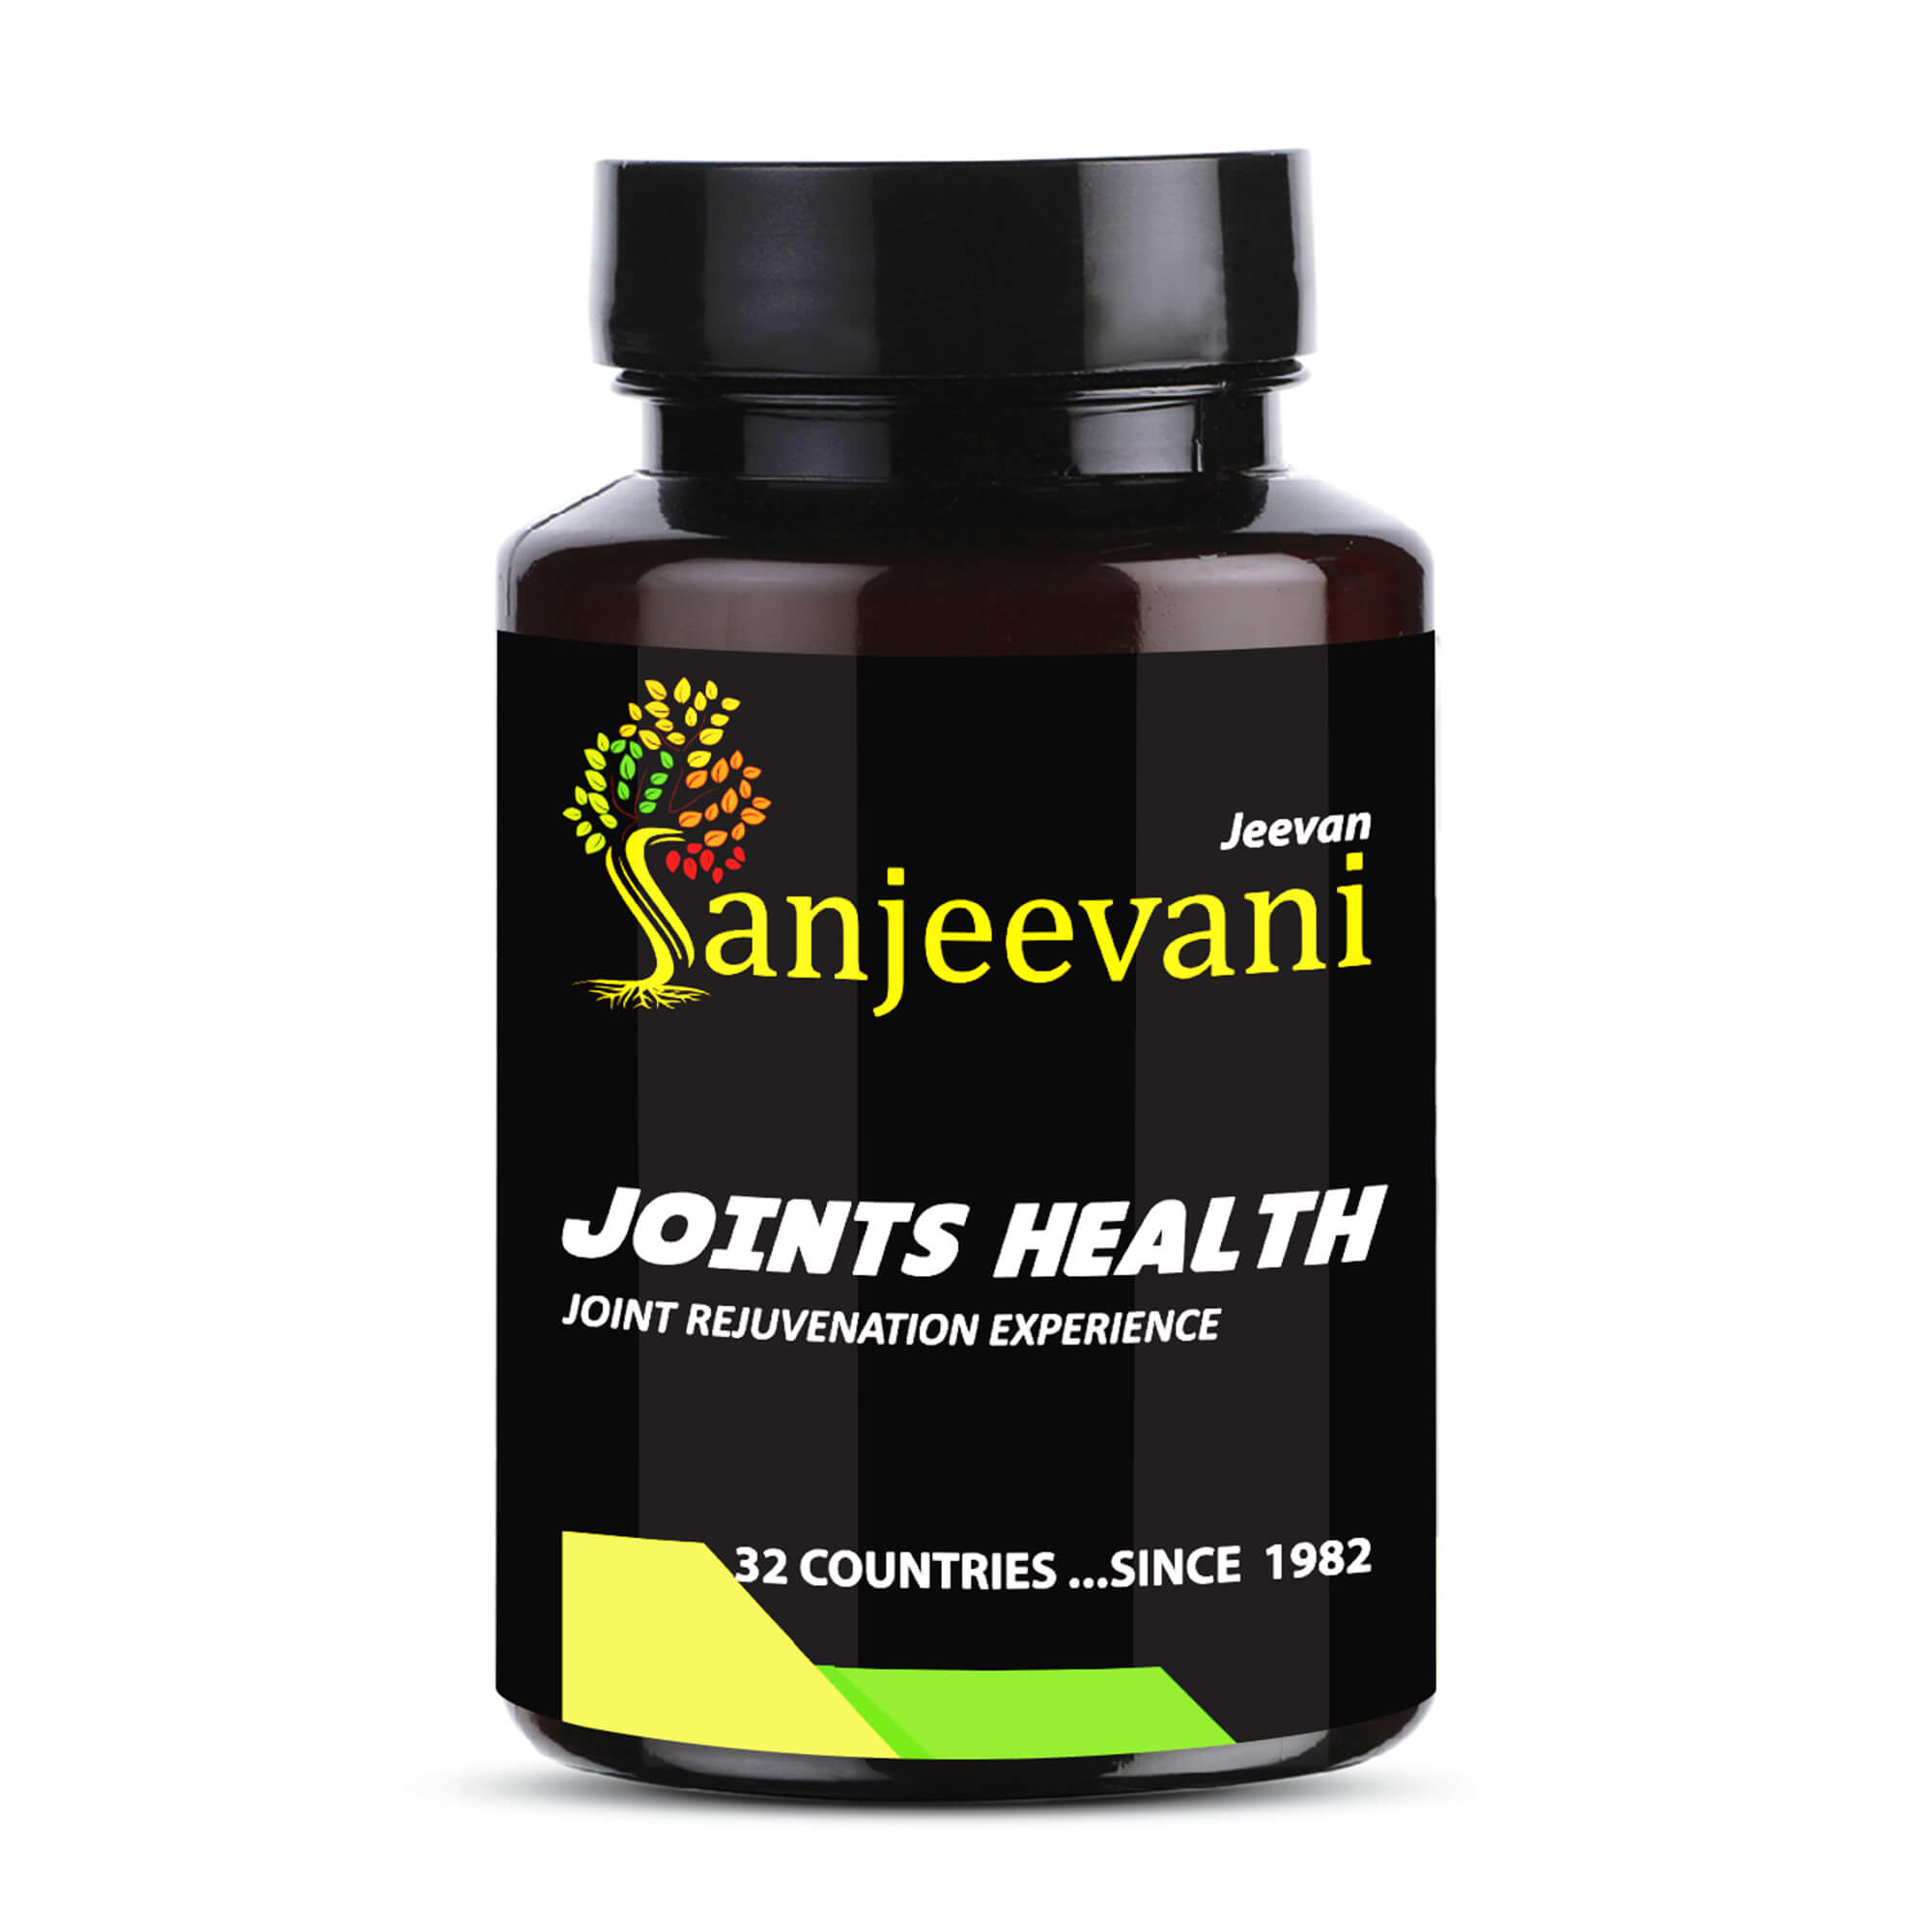 Jeevan Sanjeevani Joints Health Tablet